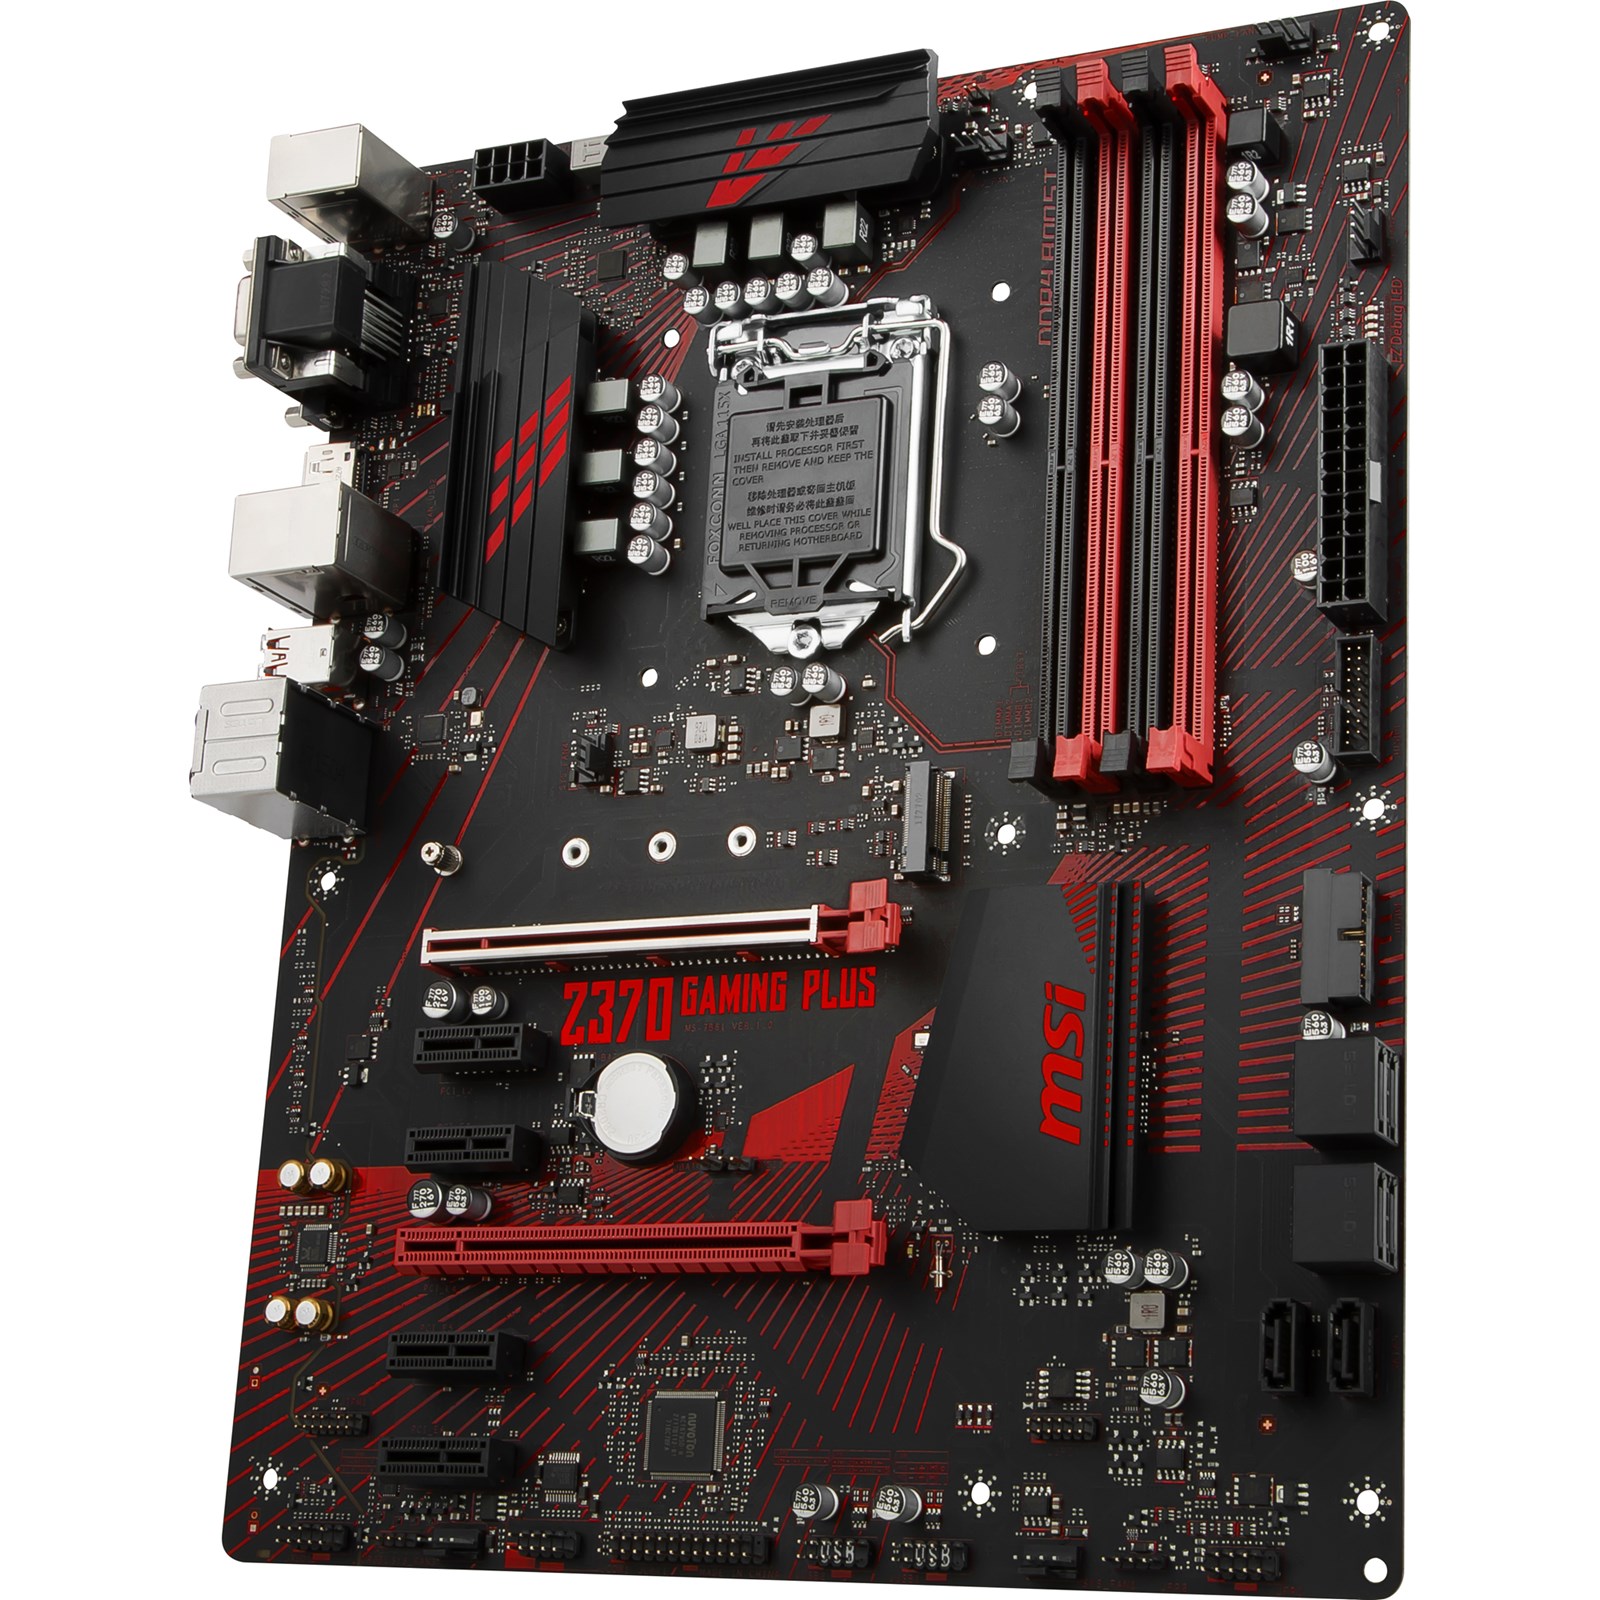 Msi Z370 Gaming Plus Intel Socket 1151 Motherboard Z370 Gaming Plus